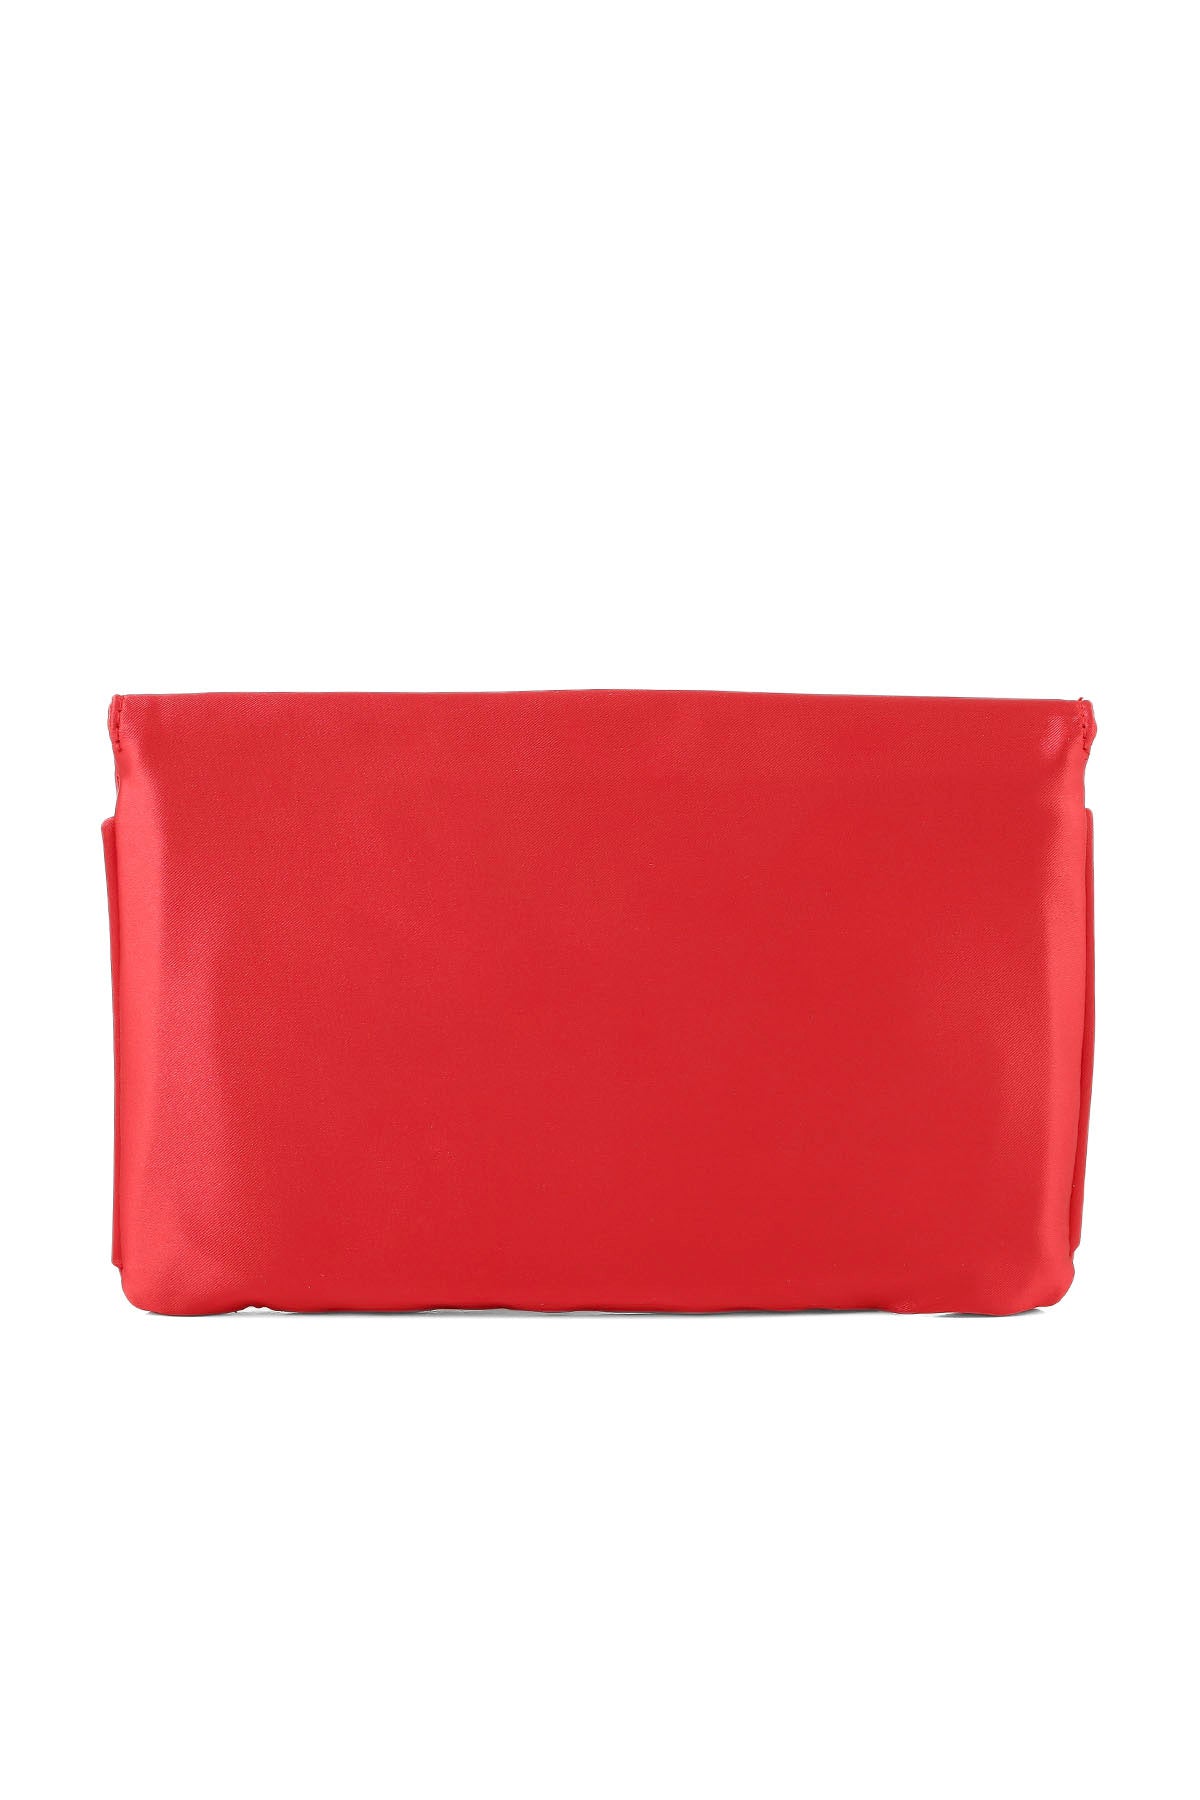 Envelope Clutch B20744-Red